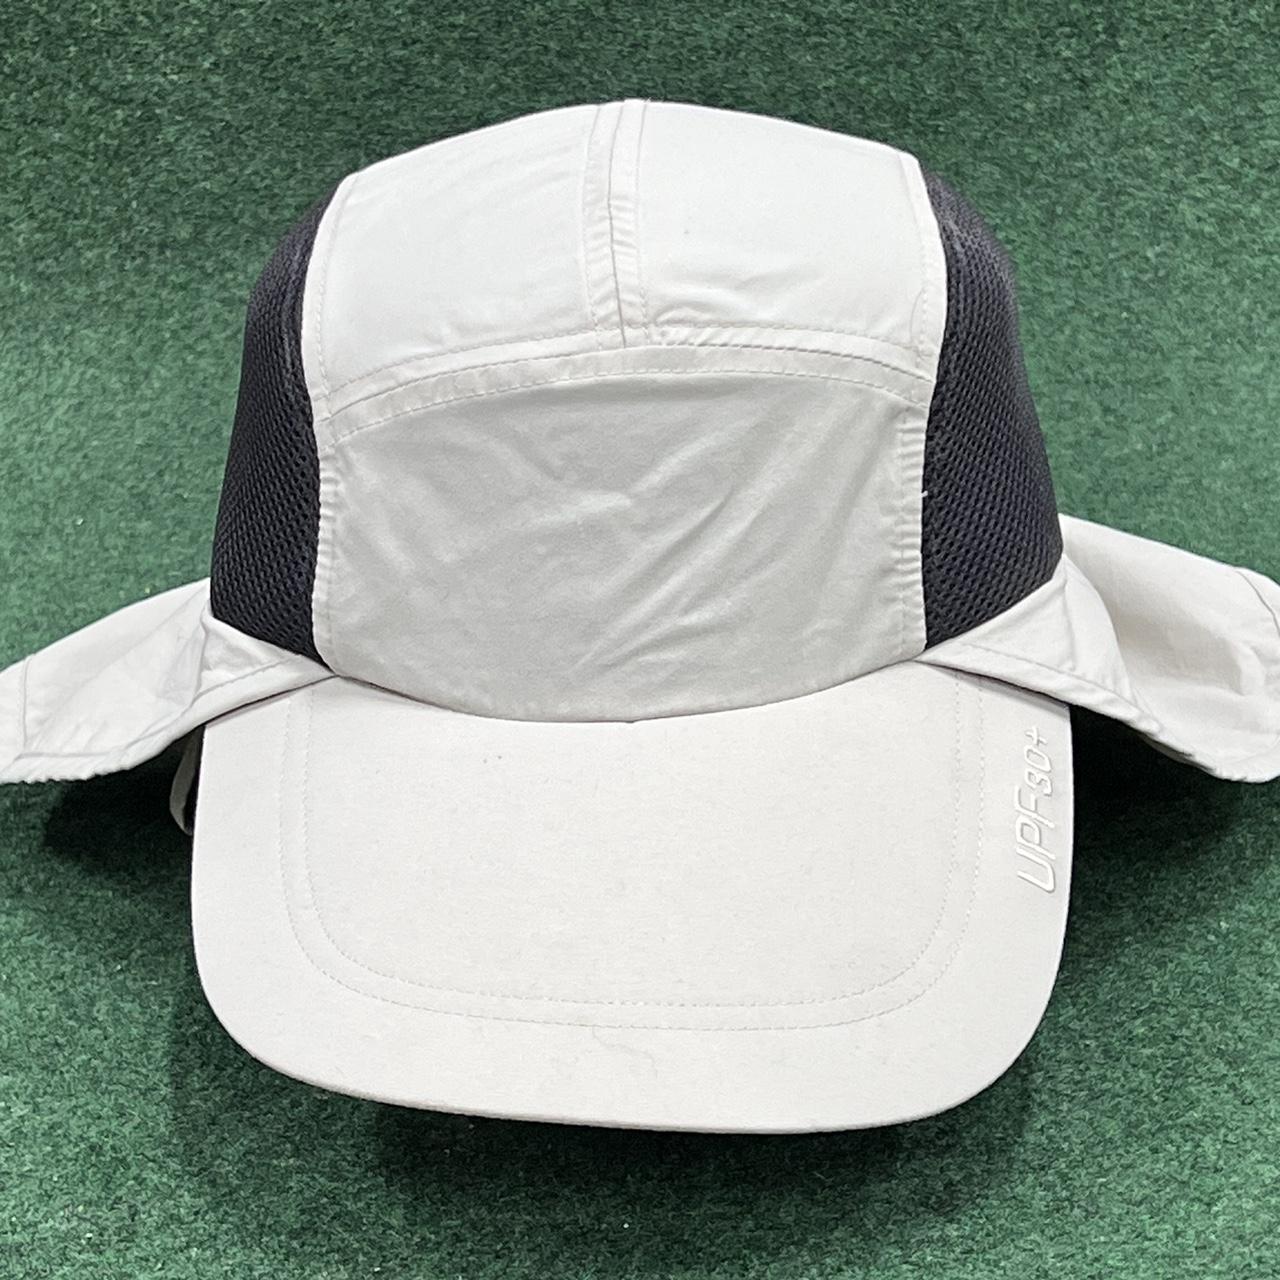 Columbia Sportswear Men's Outdoors Hat - Cream